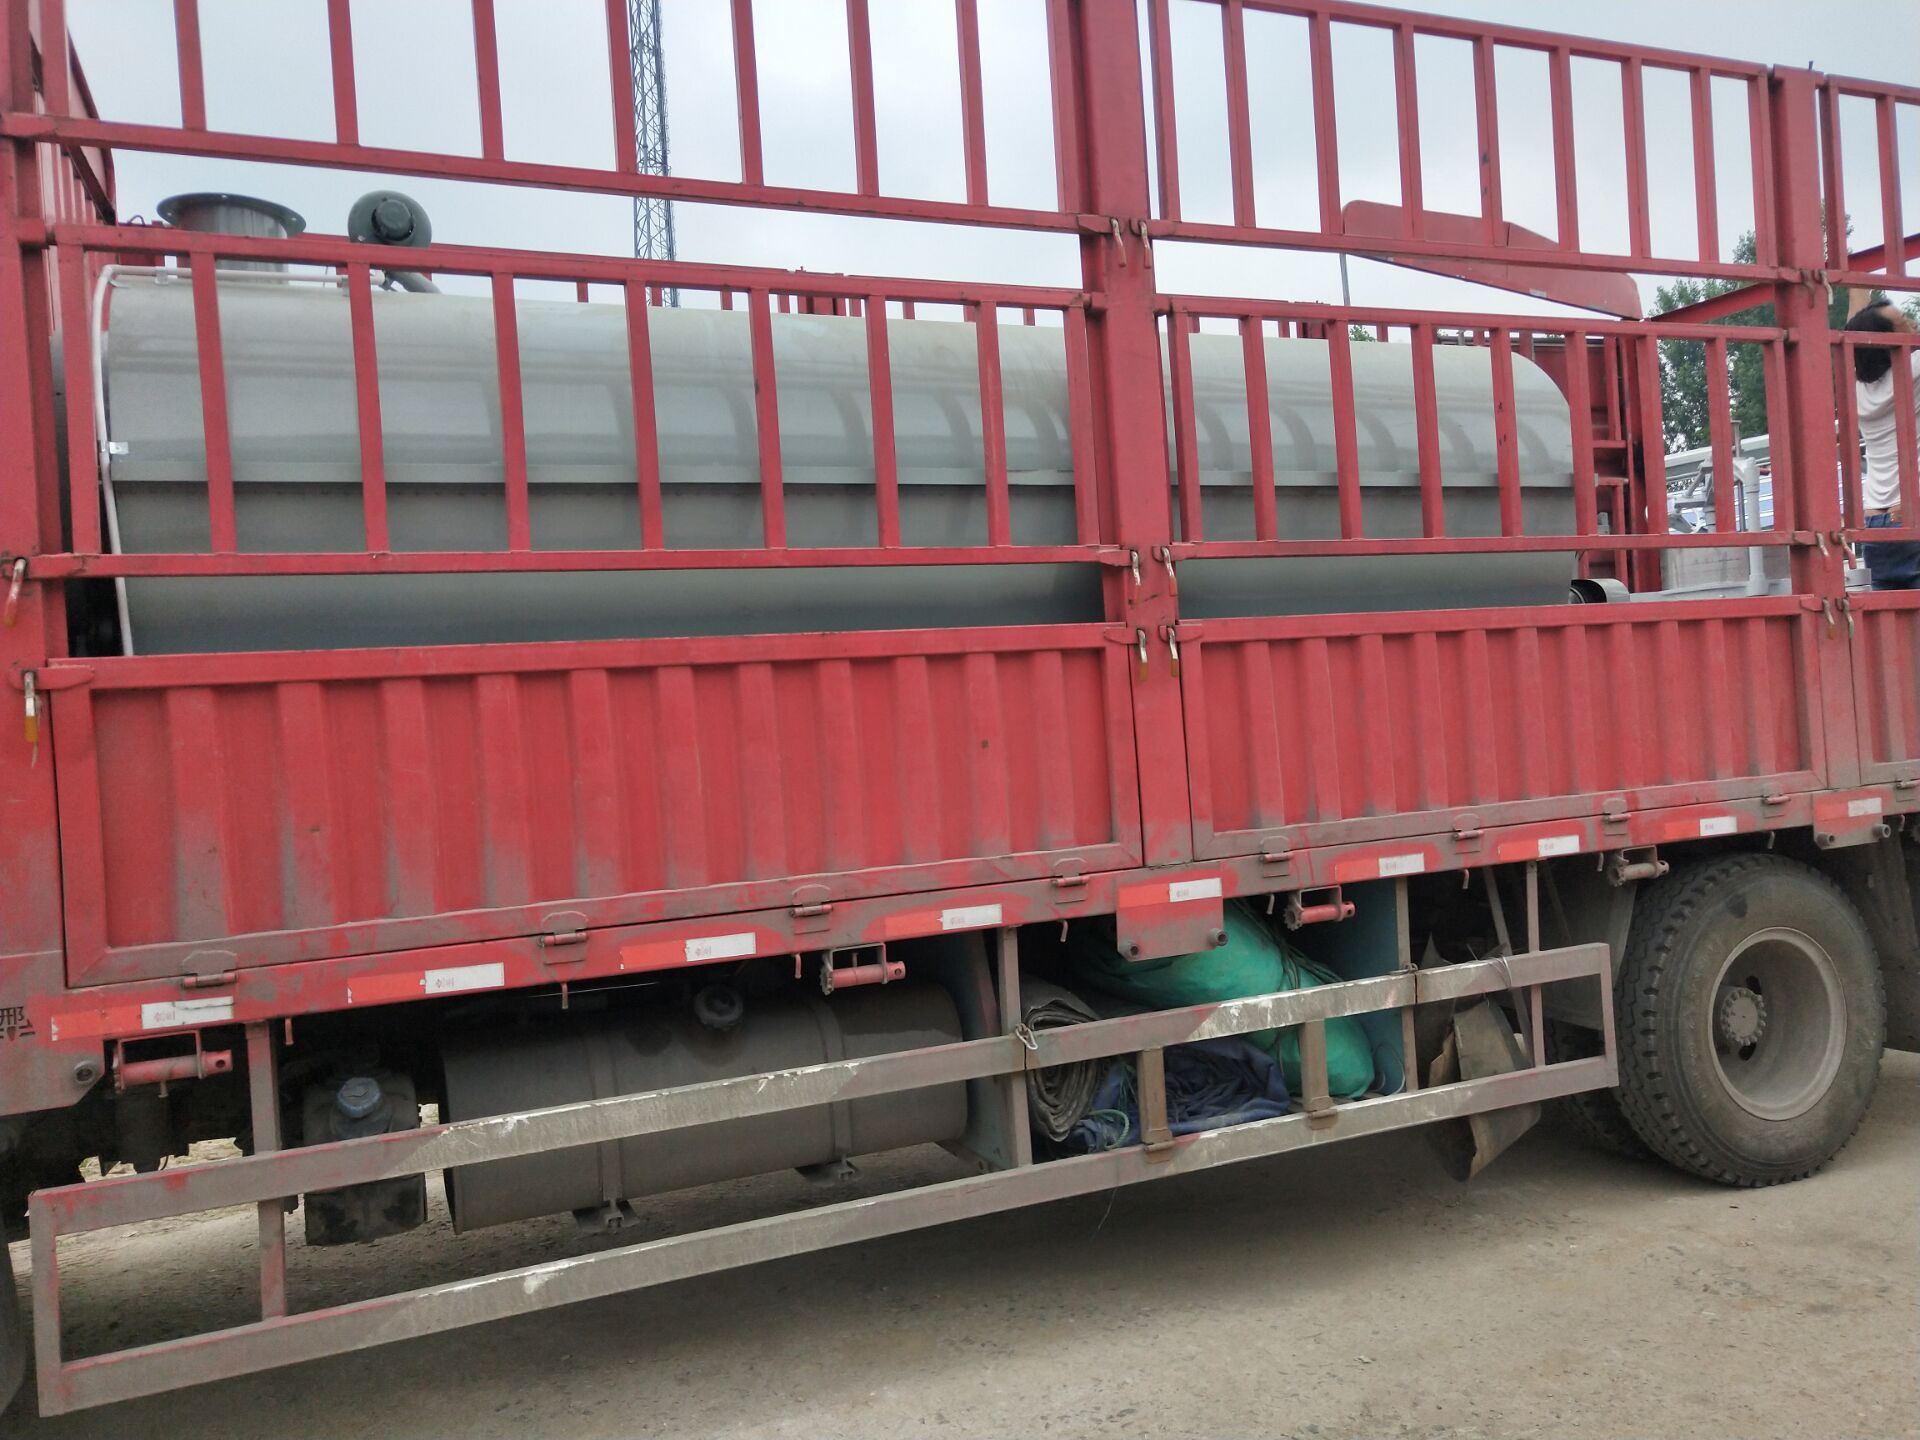 Machine equipment purchased by Hunan customers